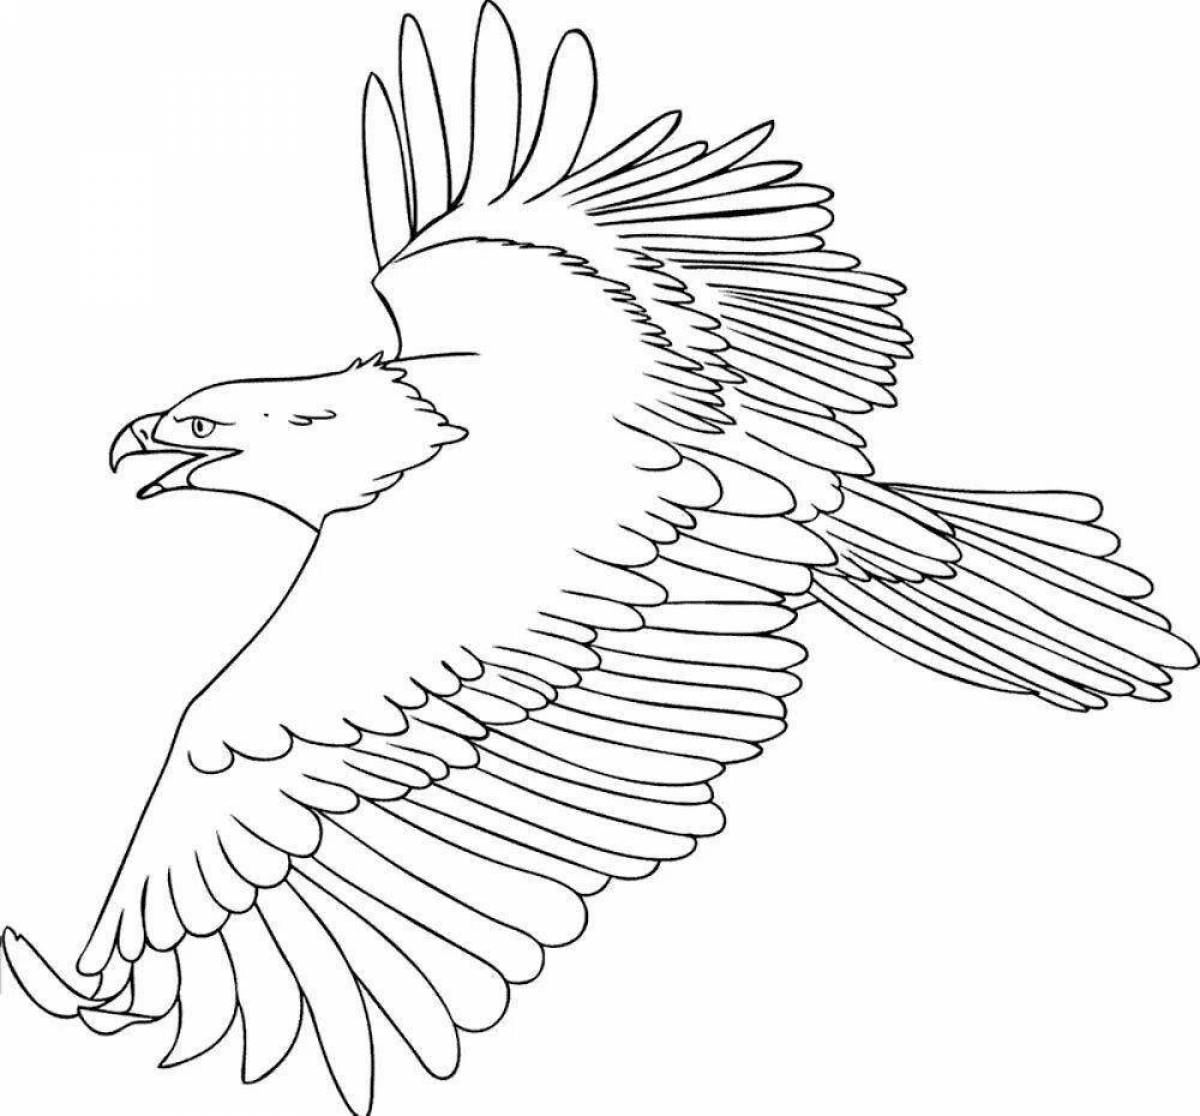 Изысканная раскраска орла для детей